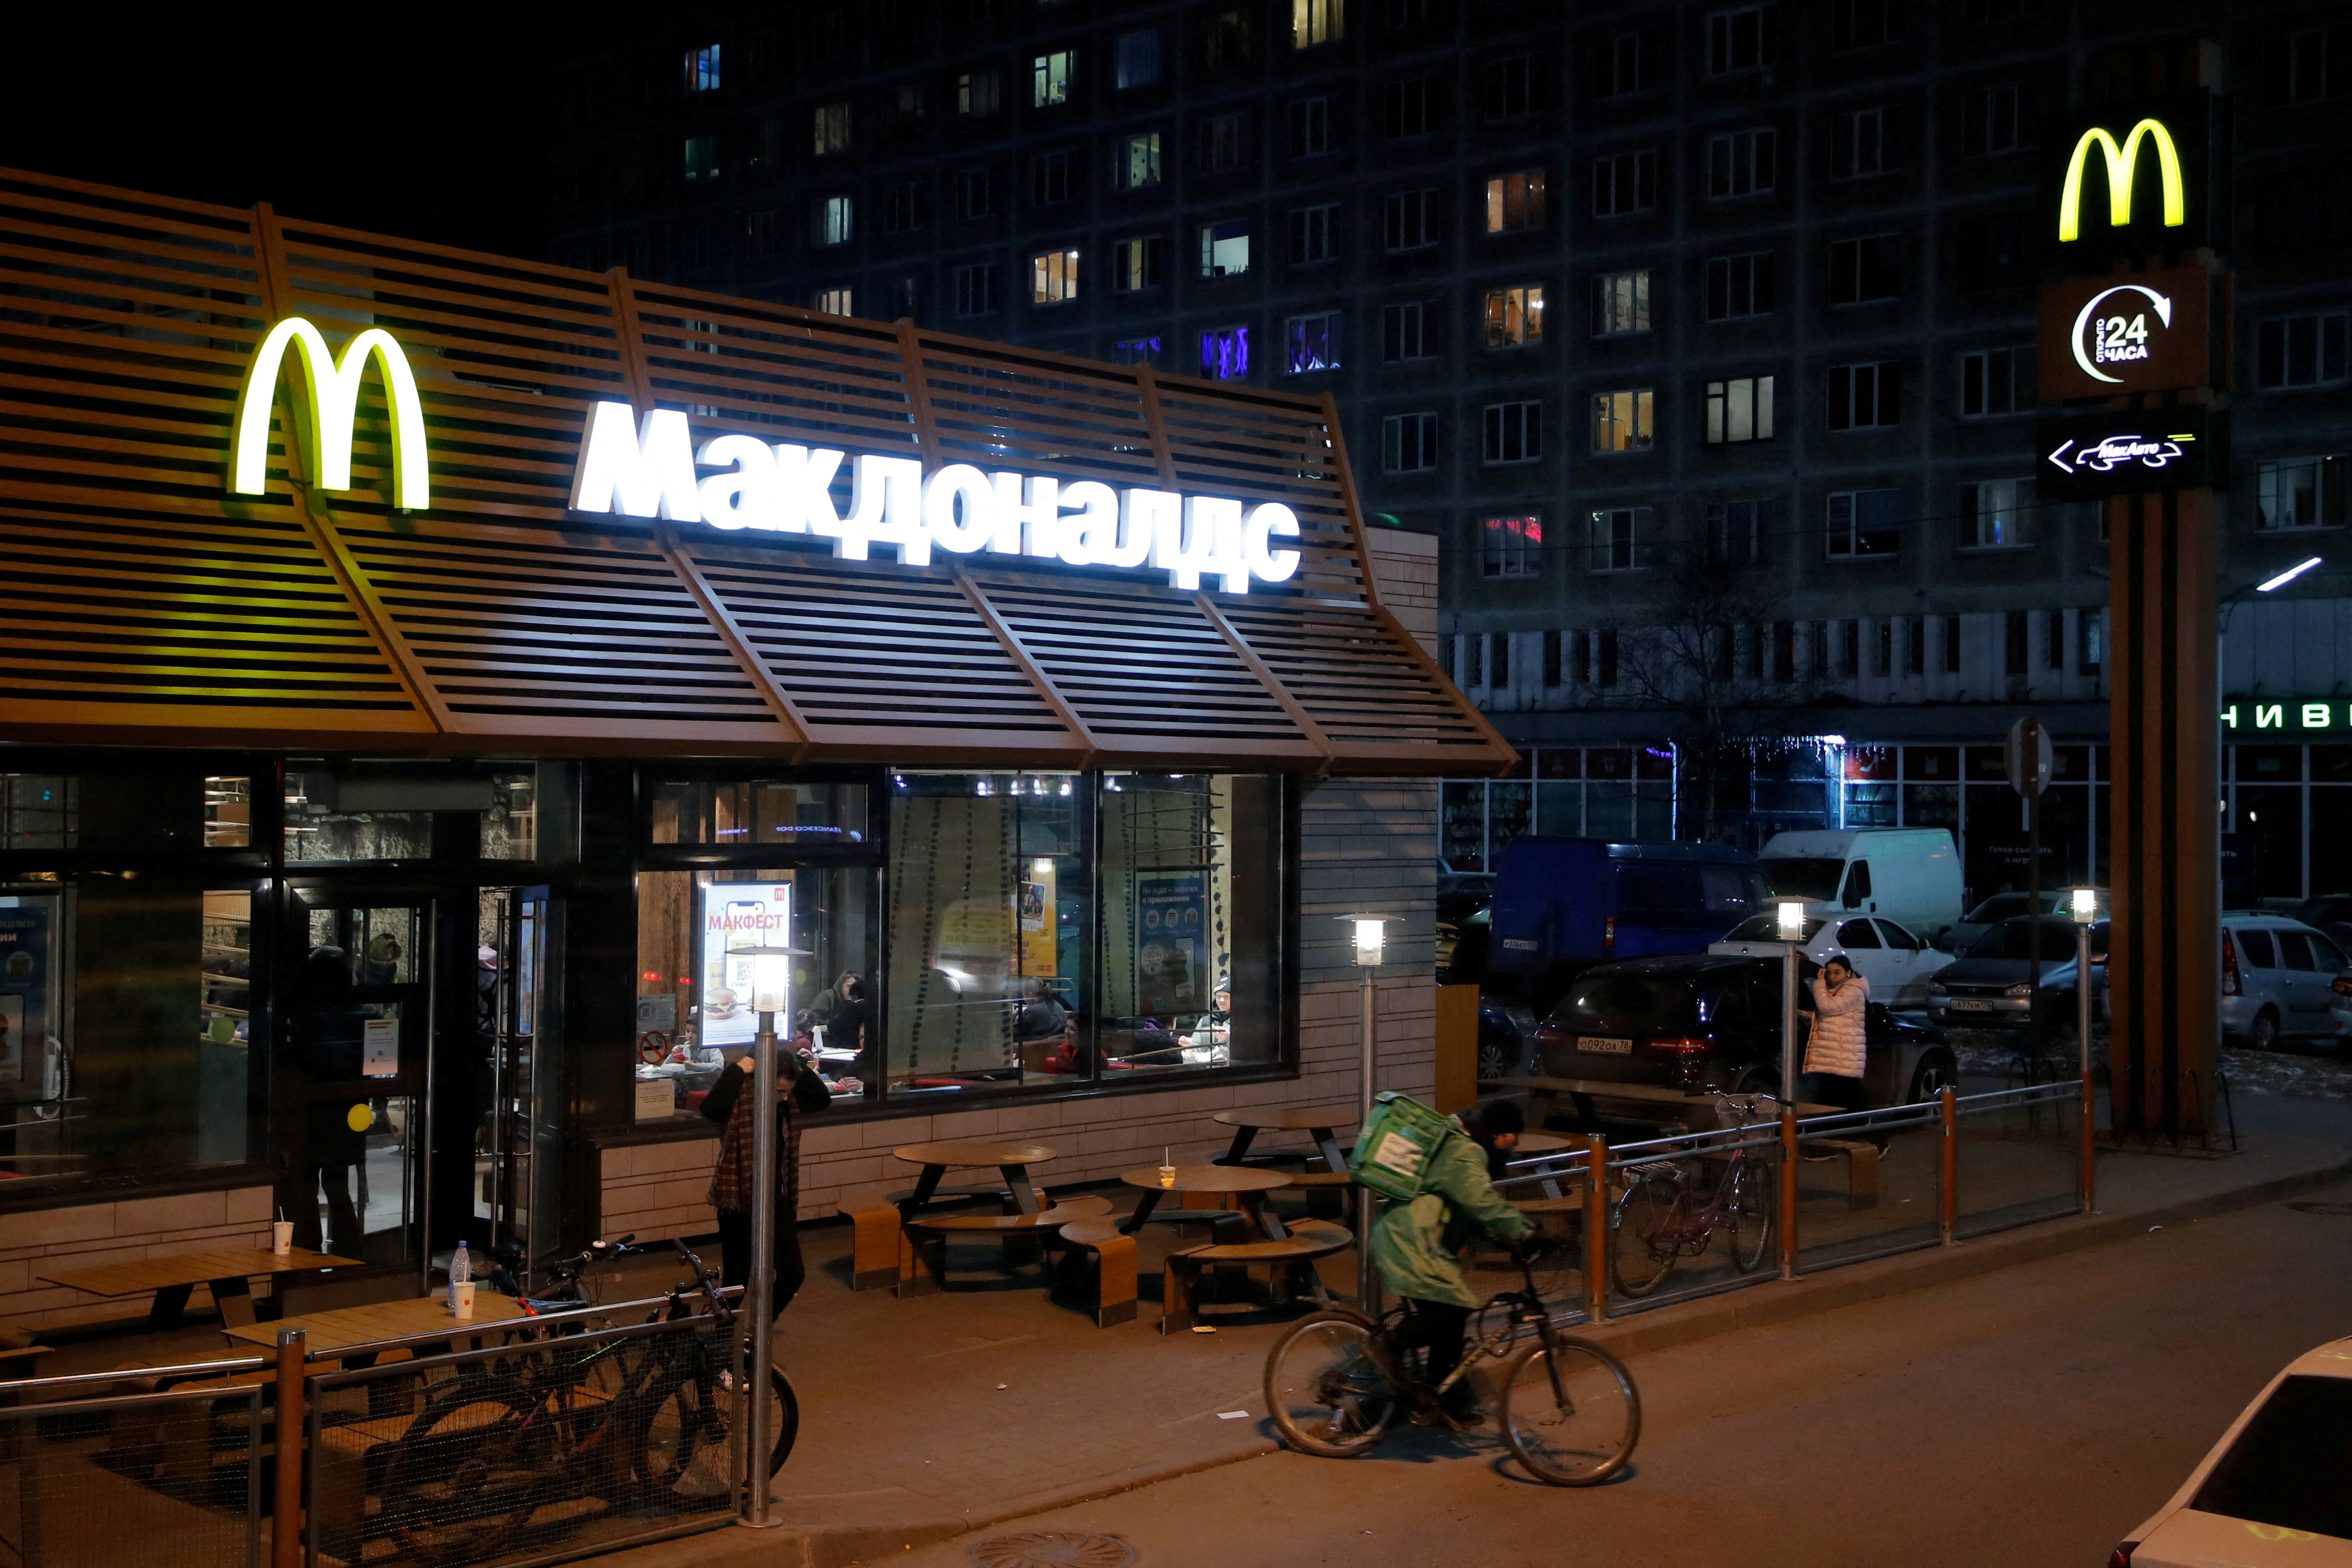 A view shows a McDonald's restaurant in Saint Petersburg